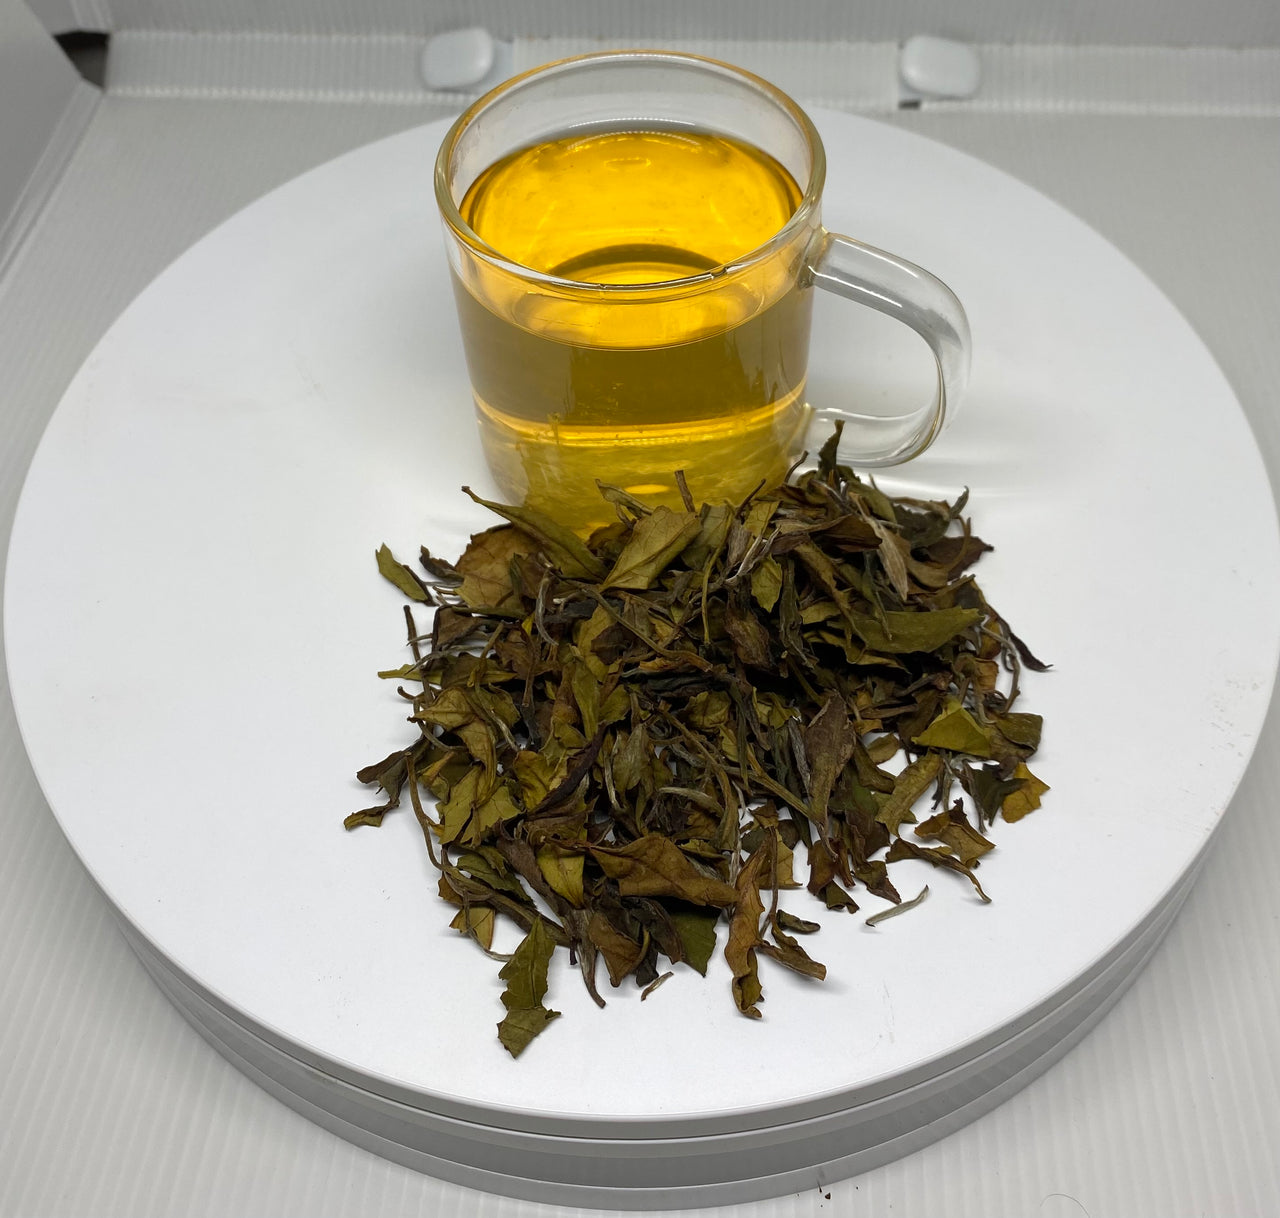 Organic White Peony Tea (20 gms)